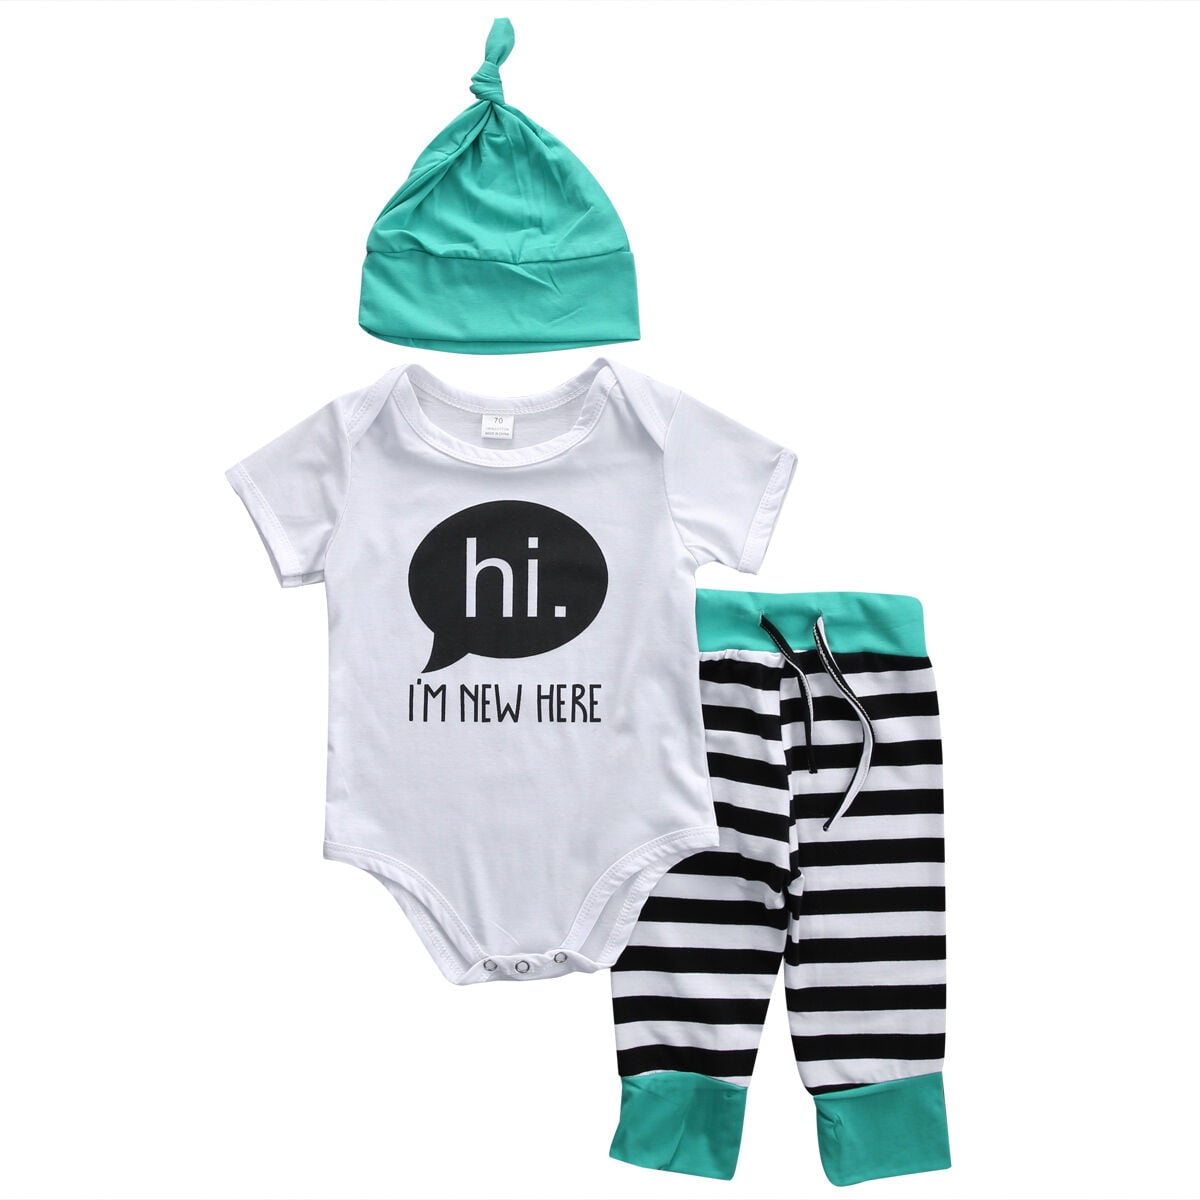 3pcs Toddler Newborn Baby Boy Girl Cotton T-shirt Tops+Pants Outfits Set Clothes 